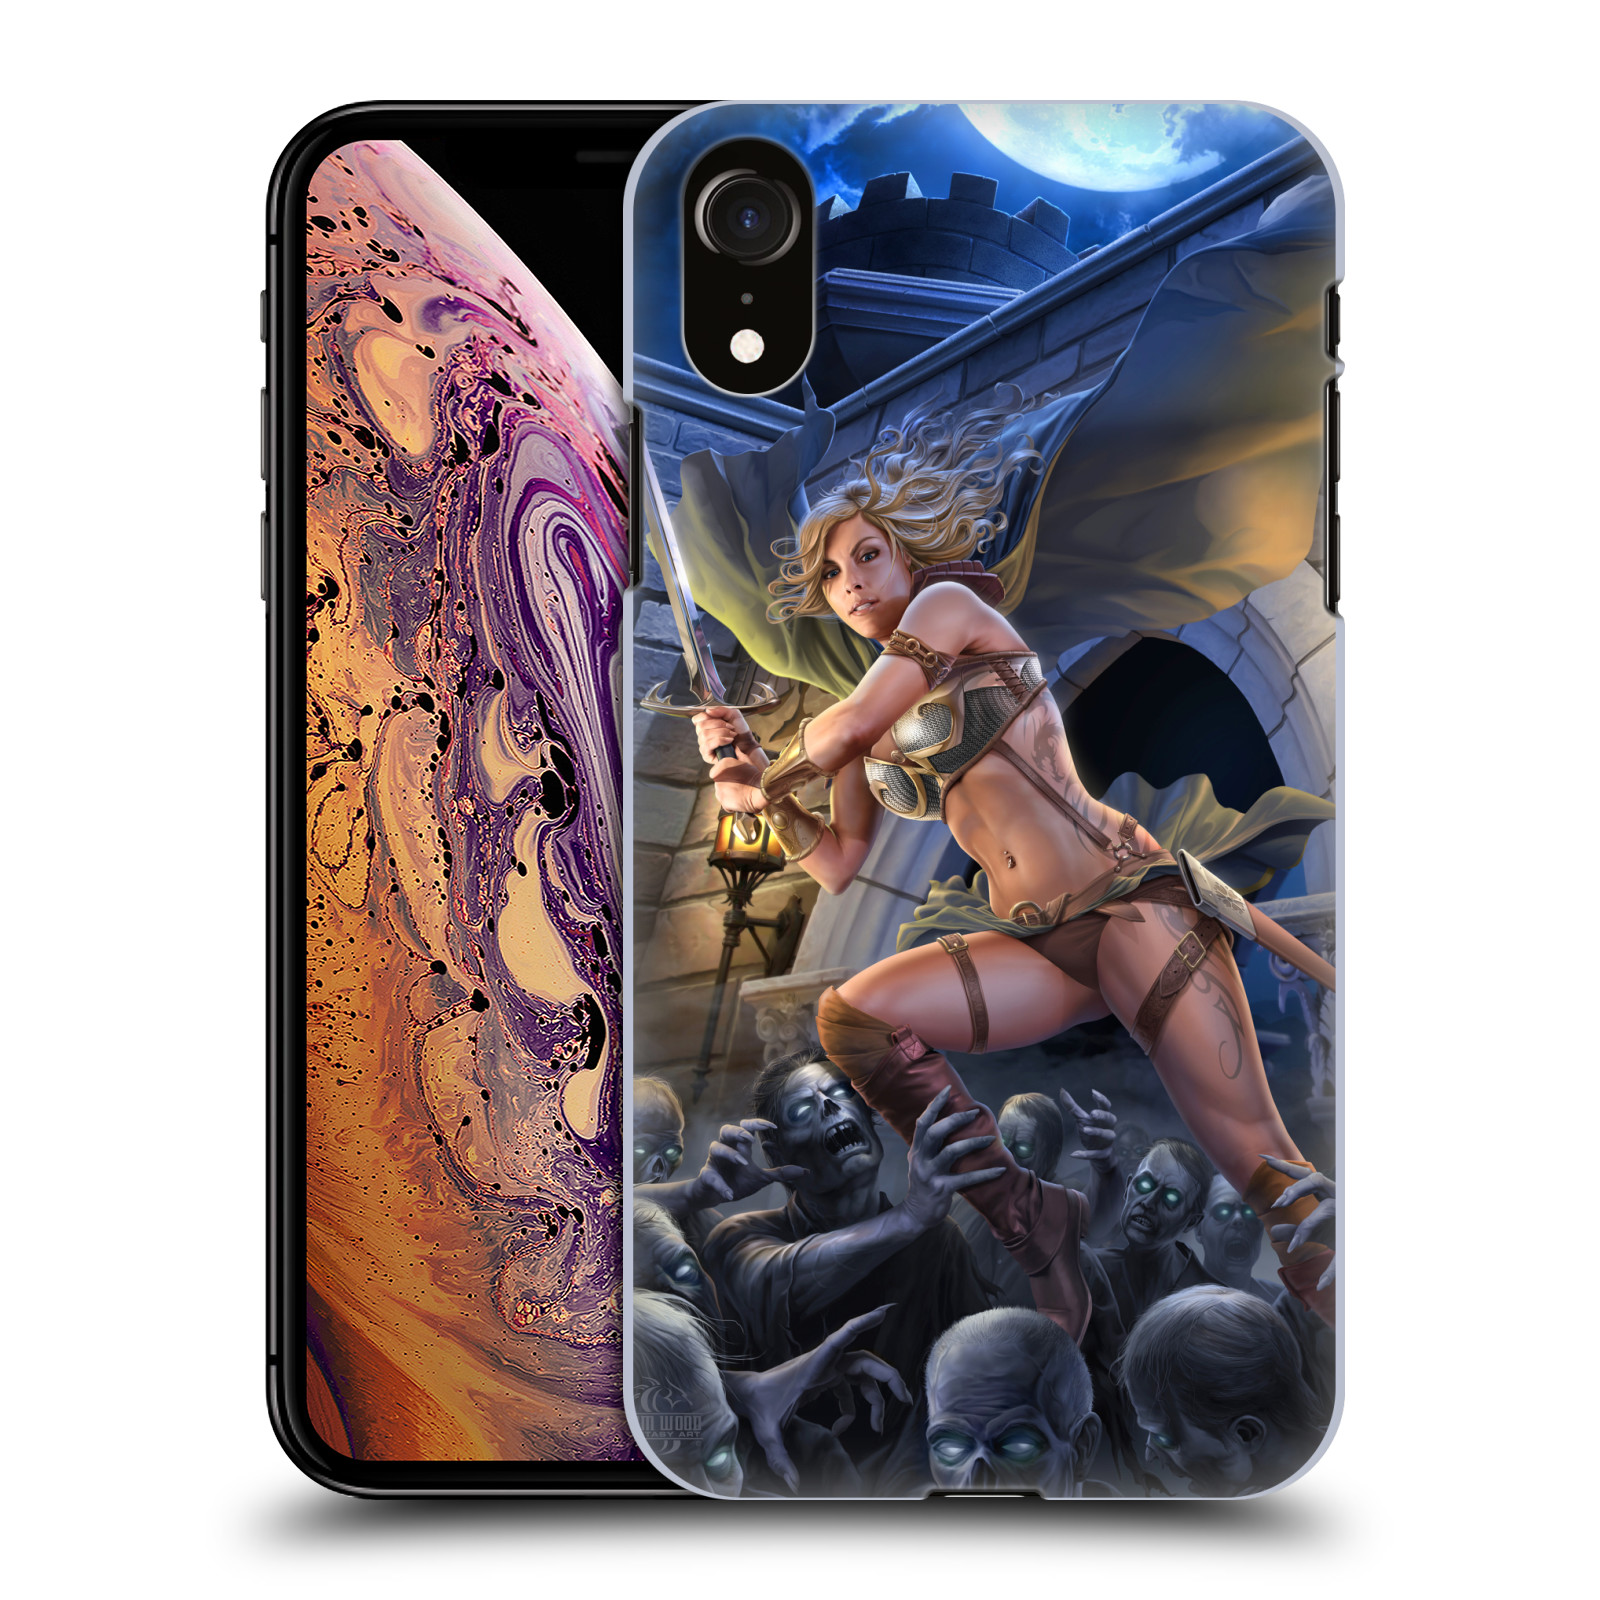 Pouzdro na mobil Apple Iphone XR - HEAD CASE - Fantasy kresby Tom Wood - Princezna bojovnice a zombies